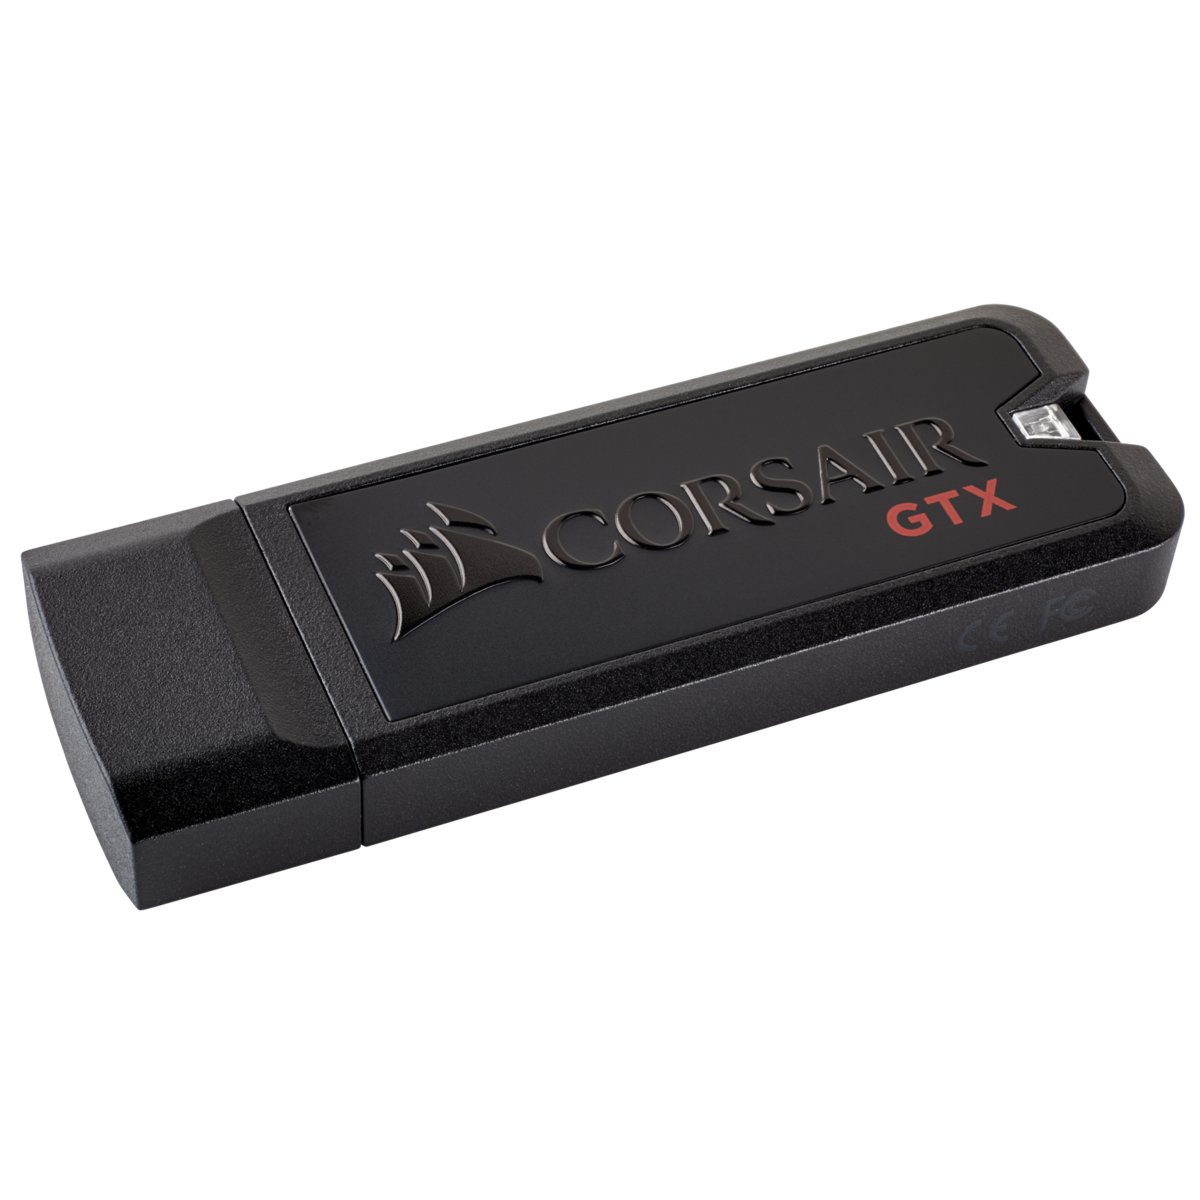 CORSAIR FLASH DRIVE 512G VOYAGER GTX USB3.1